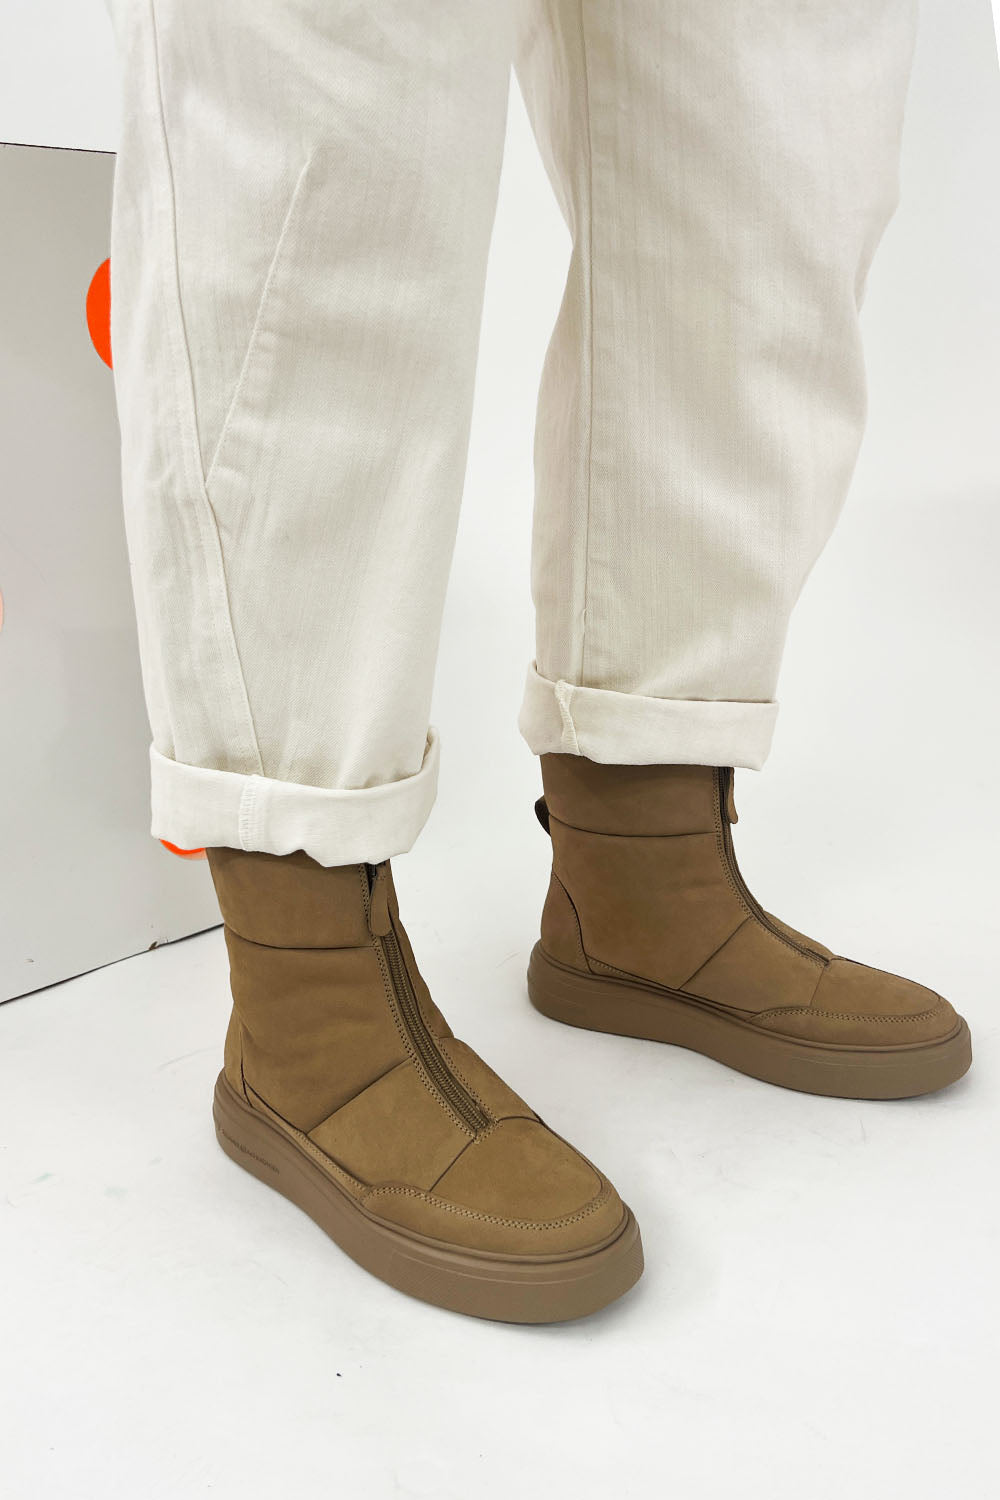 Kennel & Schmenger - Pro Boots: Camel